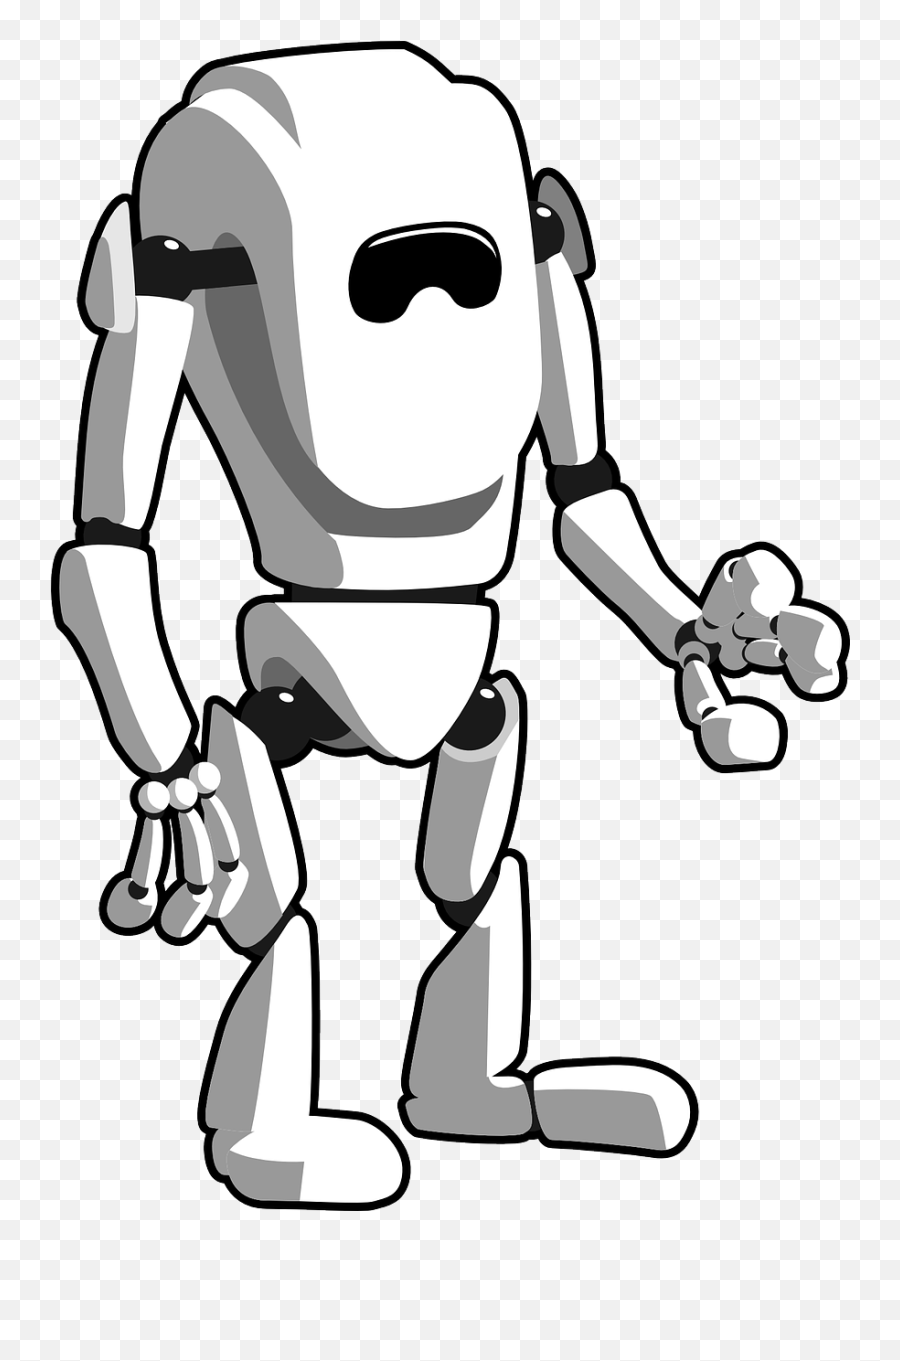 Droid Android Machine Robot Robotics - Robot Black And White Emoji,Black Fist Bump Emoji